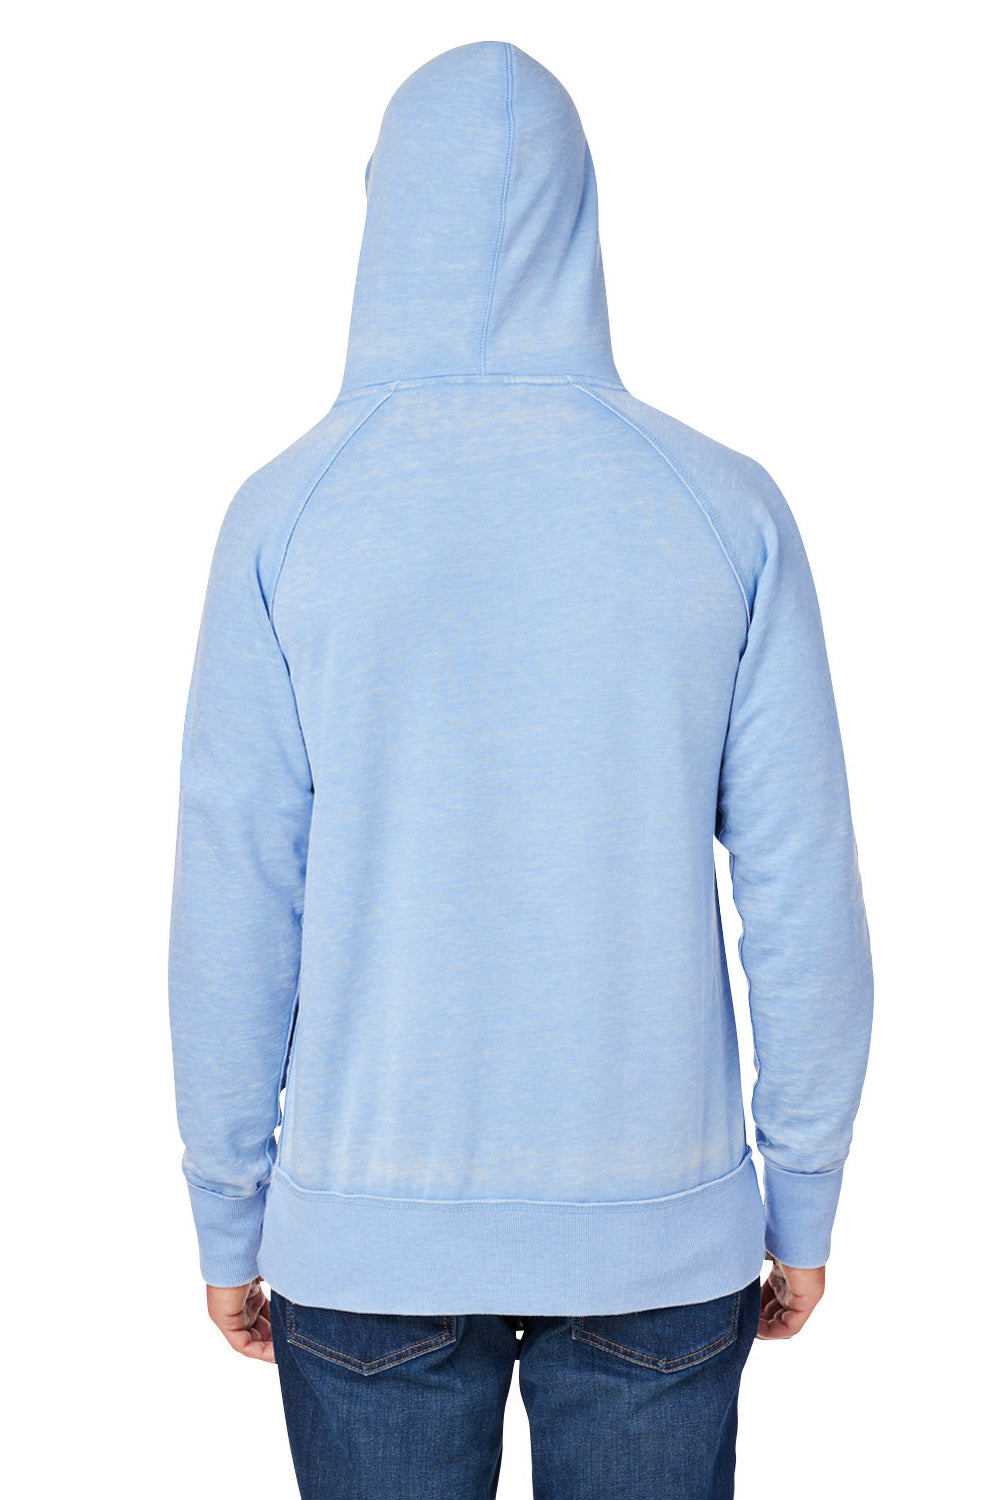 J America JA8915/8915 Mens Vintage Zen Burnout Fleece Hooded Sweatshirt Hoodie Chambray Blue Back